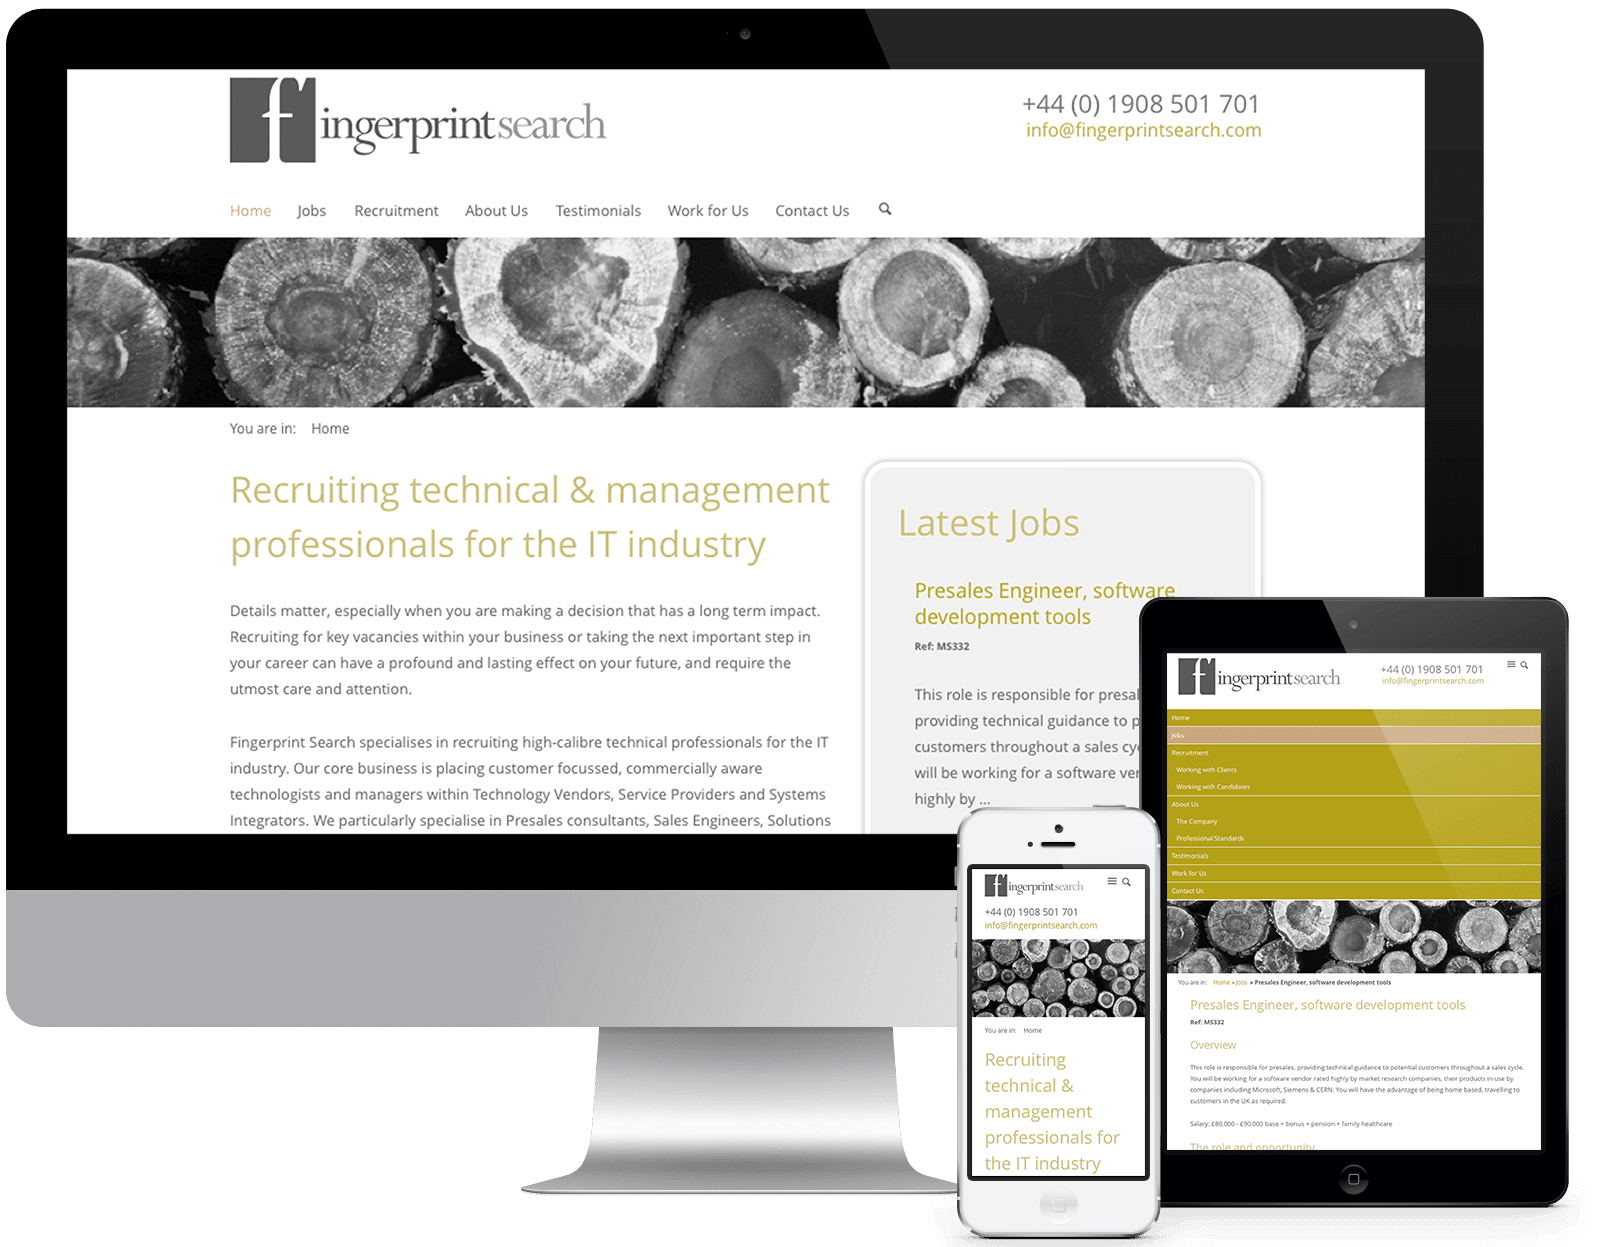 Fingerprint Search - View Project